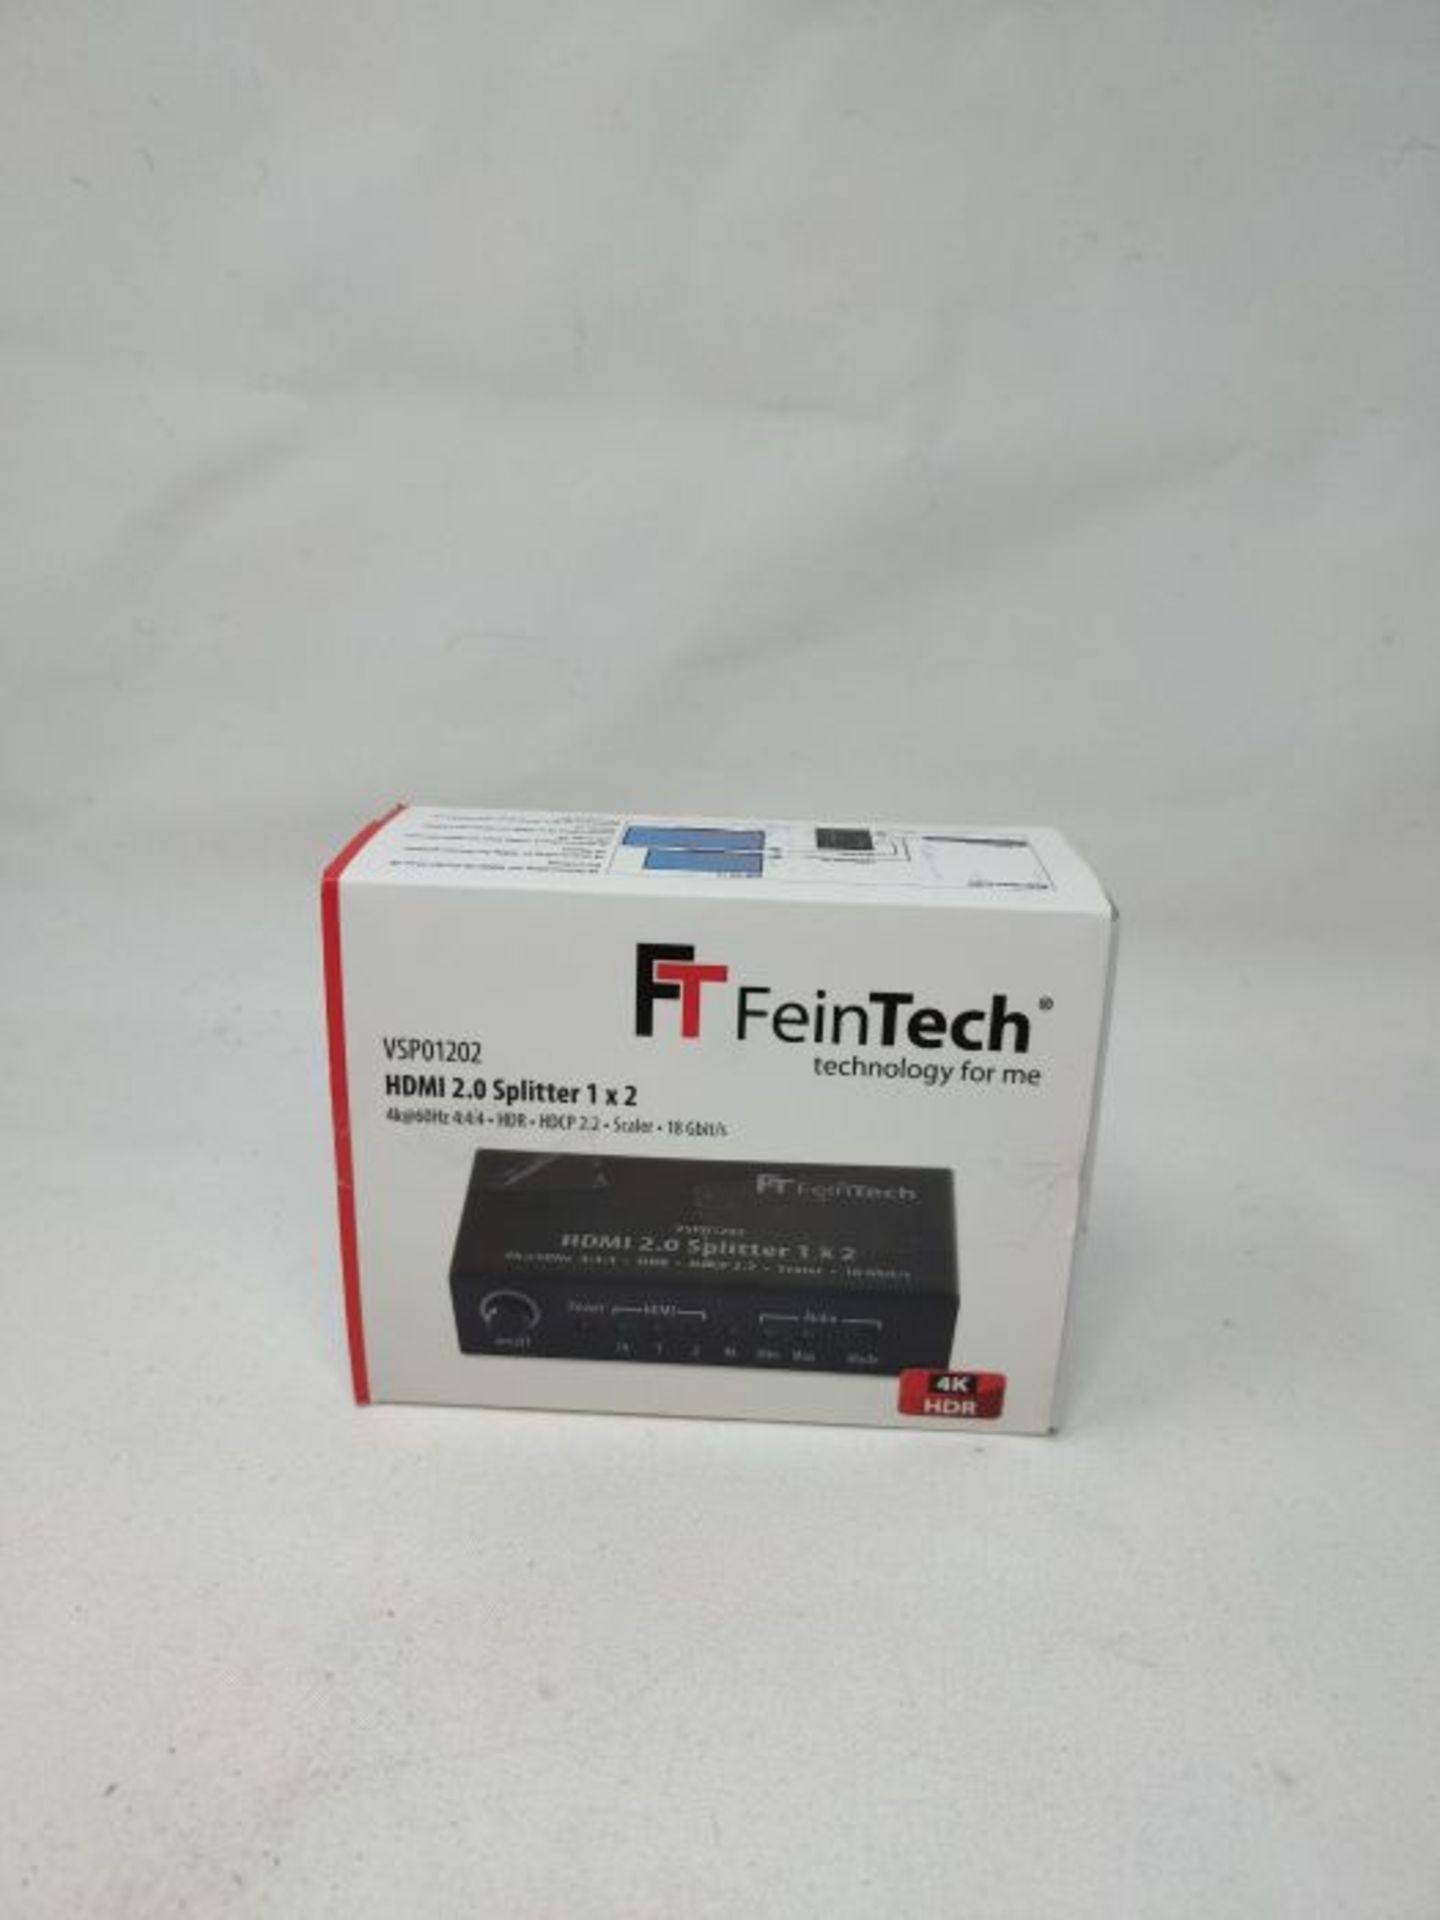 FeinTech VSP01202 HDMI 2.0 Splitter 1x2 mit 4K HDR Down-Scaler Audio-EDID Schwarz - Image 2 of 3